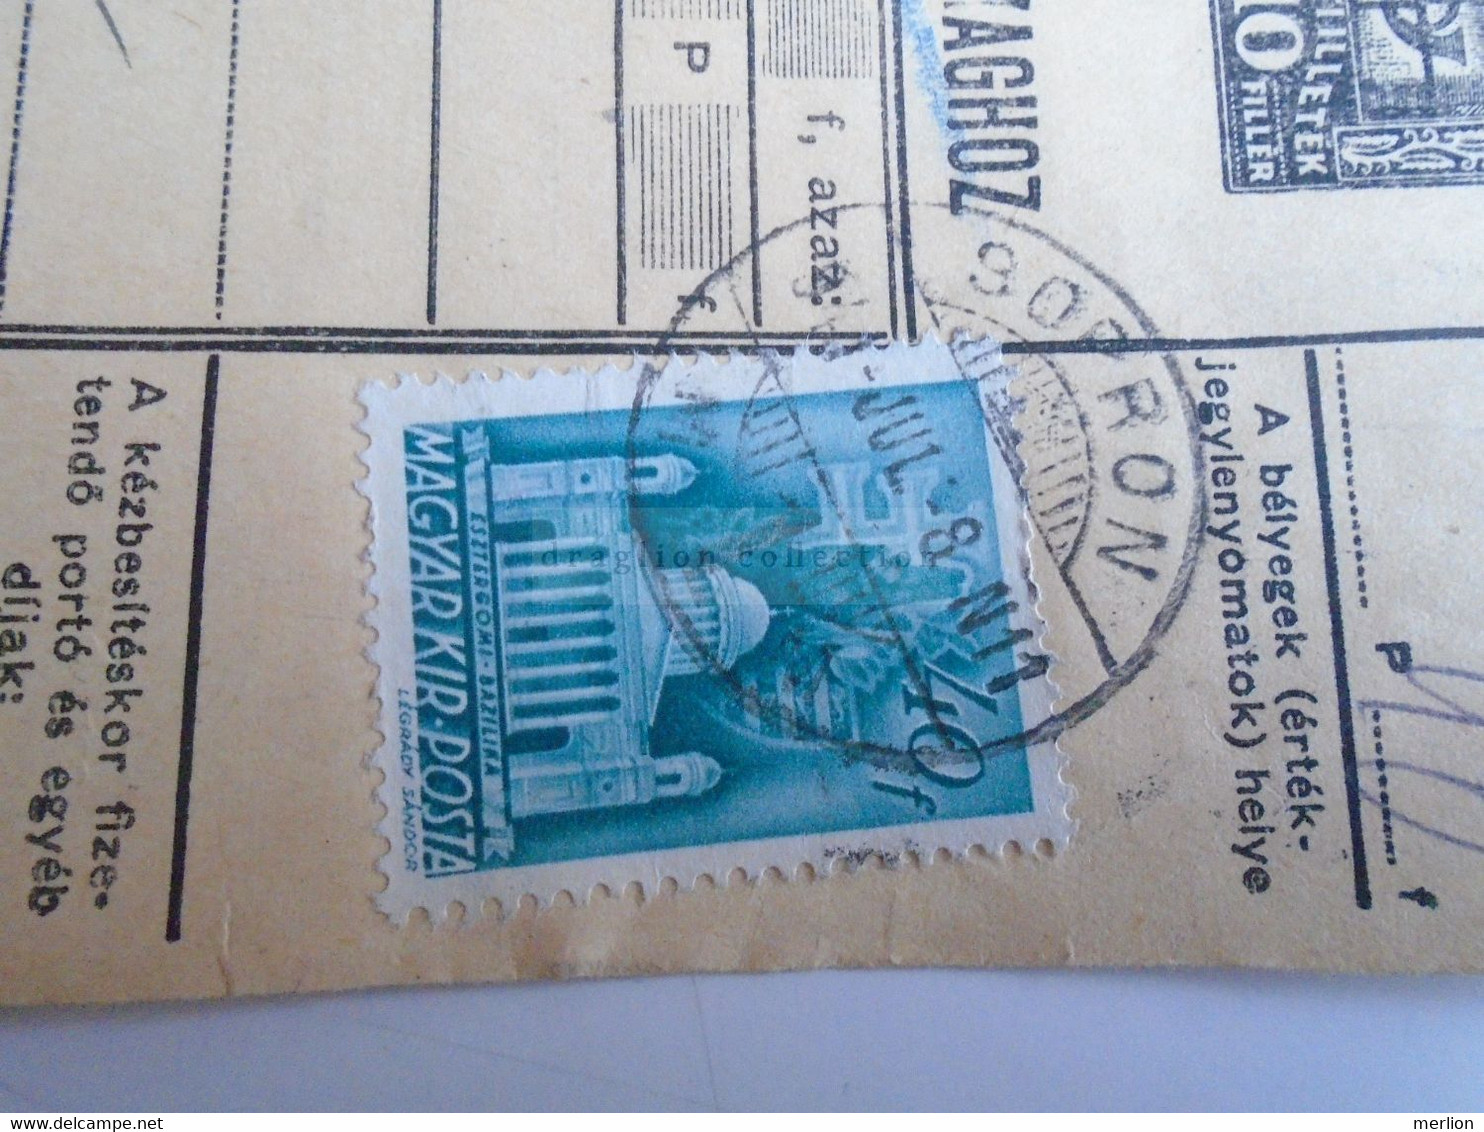 D187437   Parcel Card  (cut) Hungary 1941 SOPRON  -Kapuvár - Postpaketten